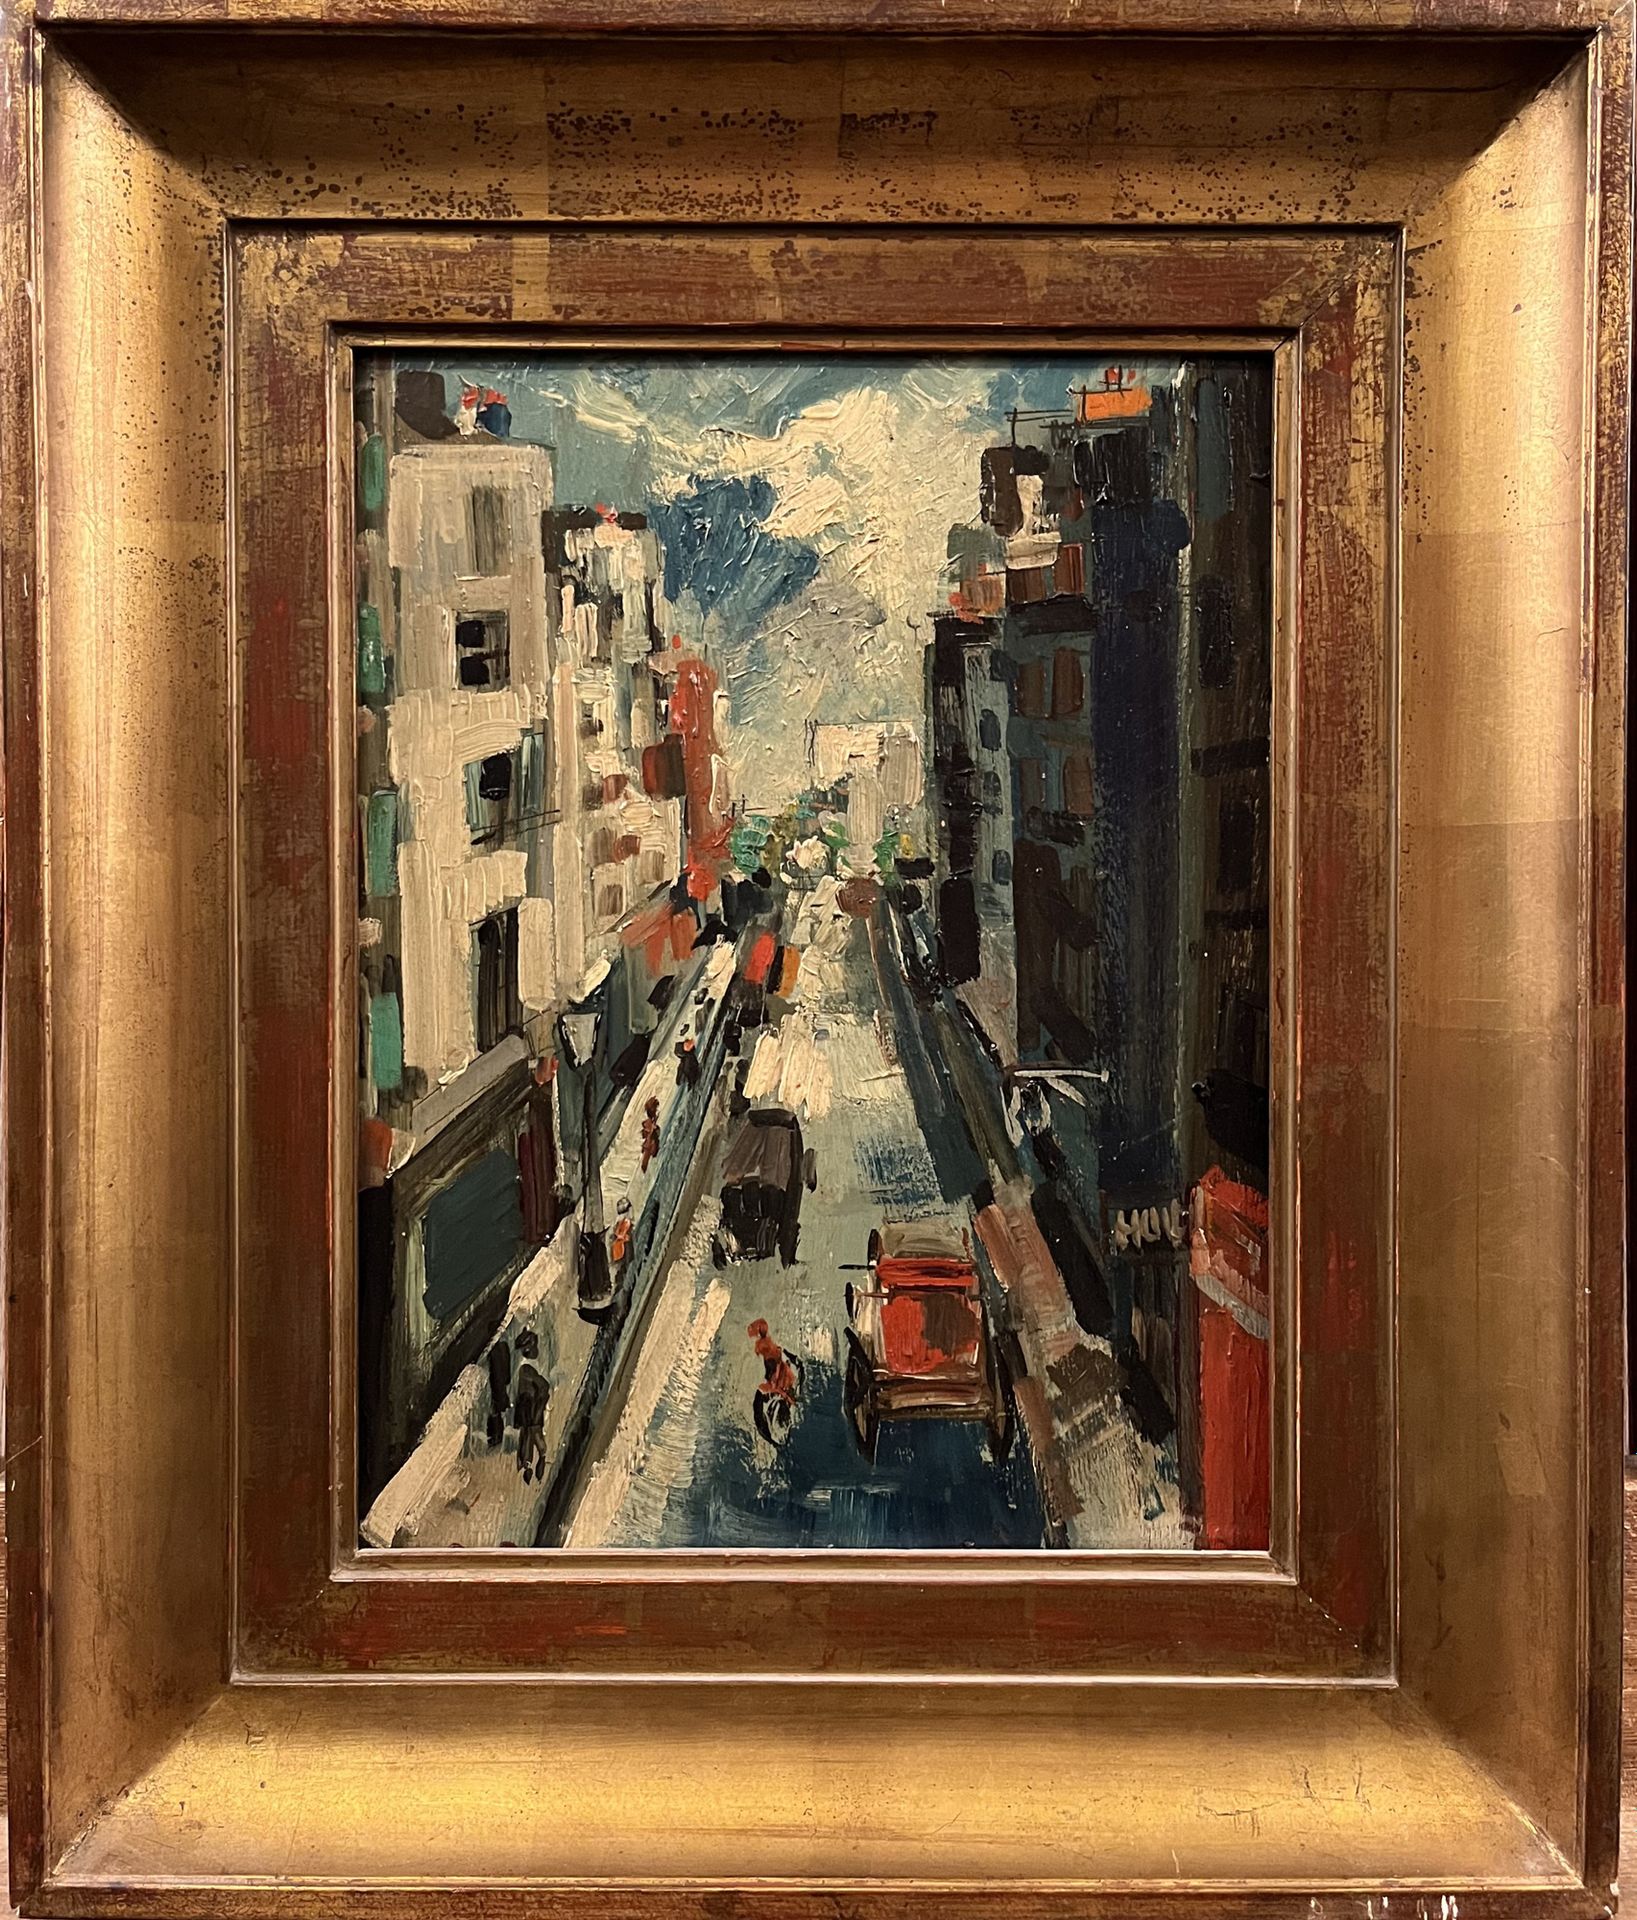 Null 米歇尔-玛丽-普兰(1906-1911)

"这条街道

板面油画，右下角有文字说明。 

35x27厘米